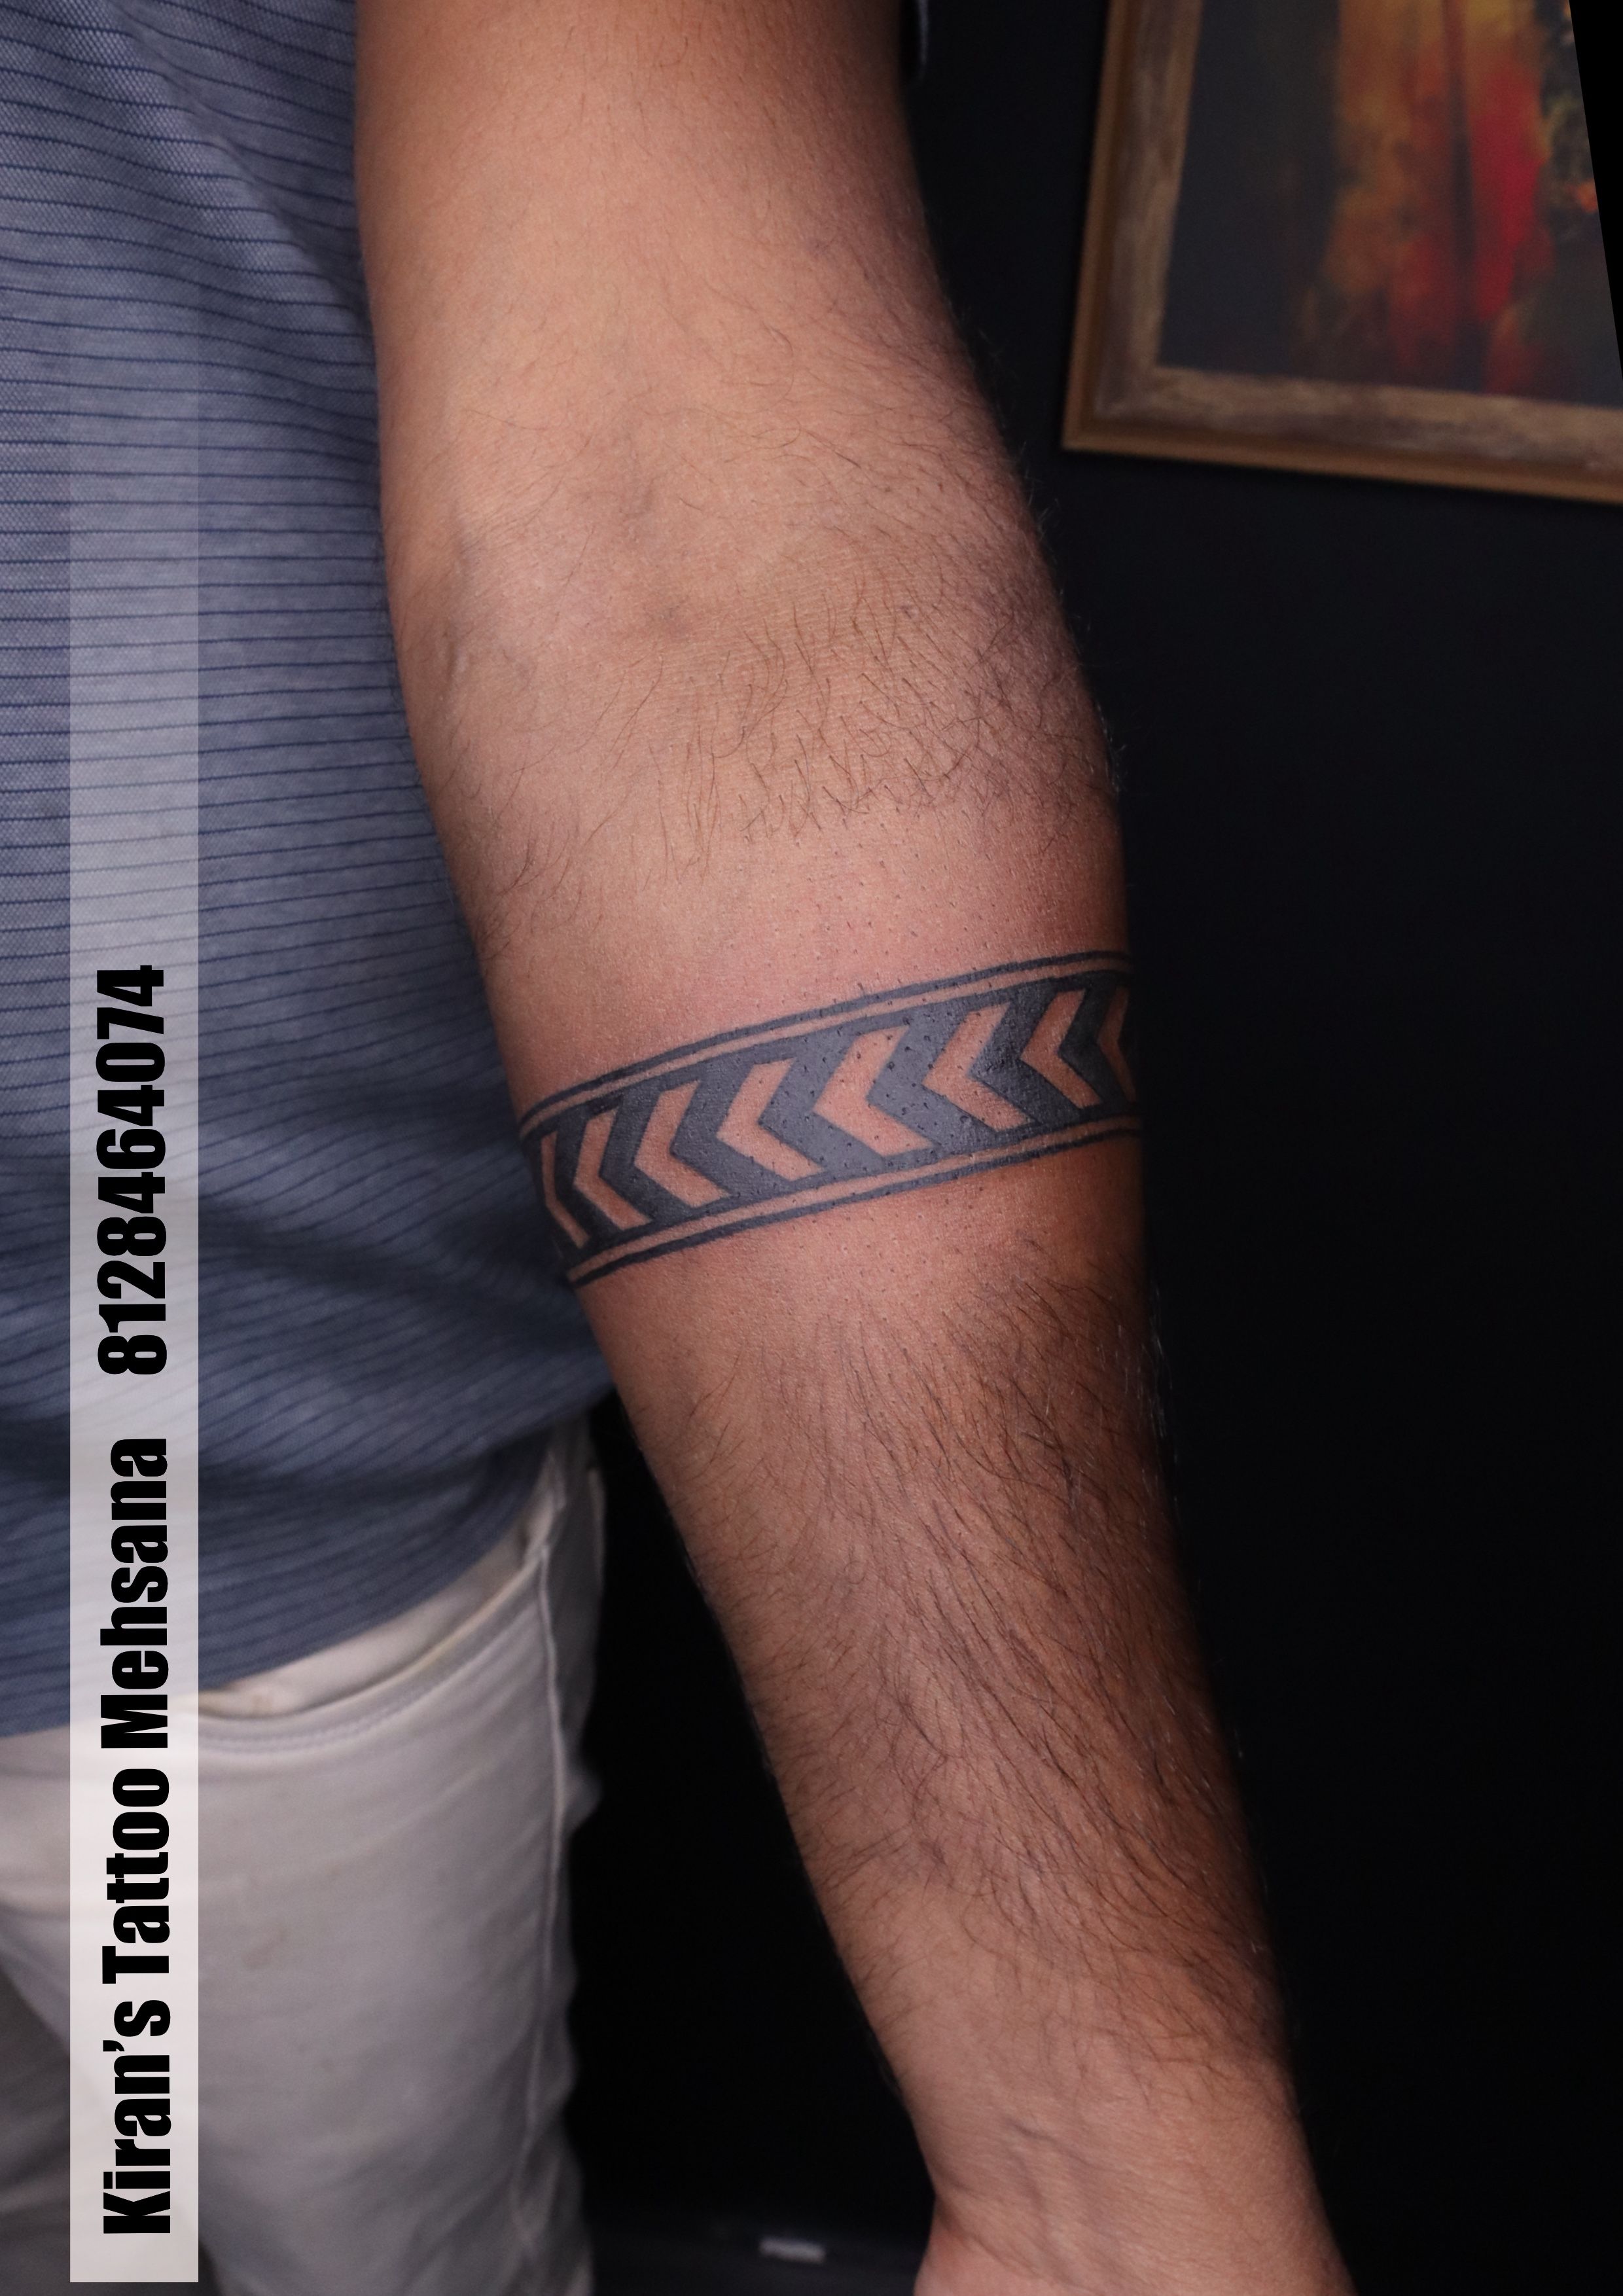 Forearm Band Tattoos - Best Tattoo Ideas Gallery